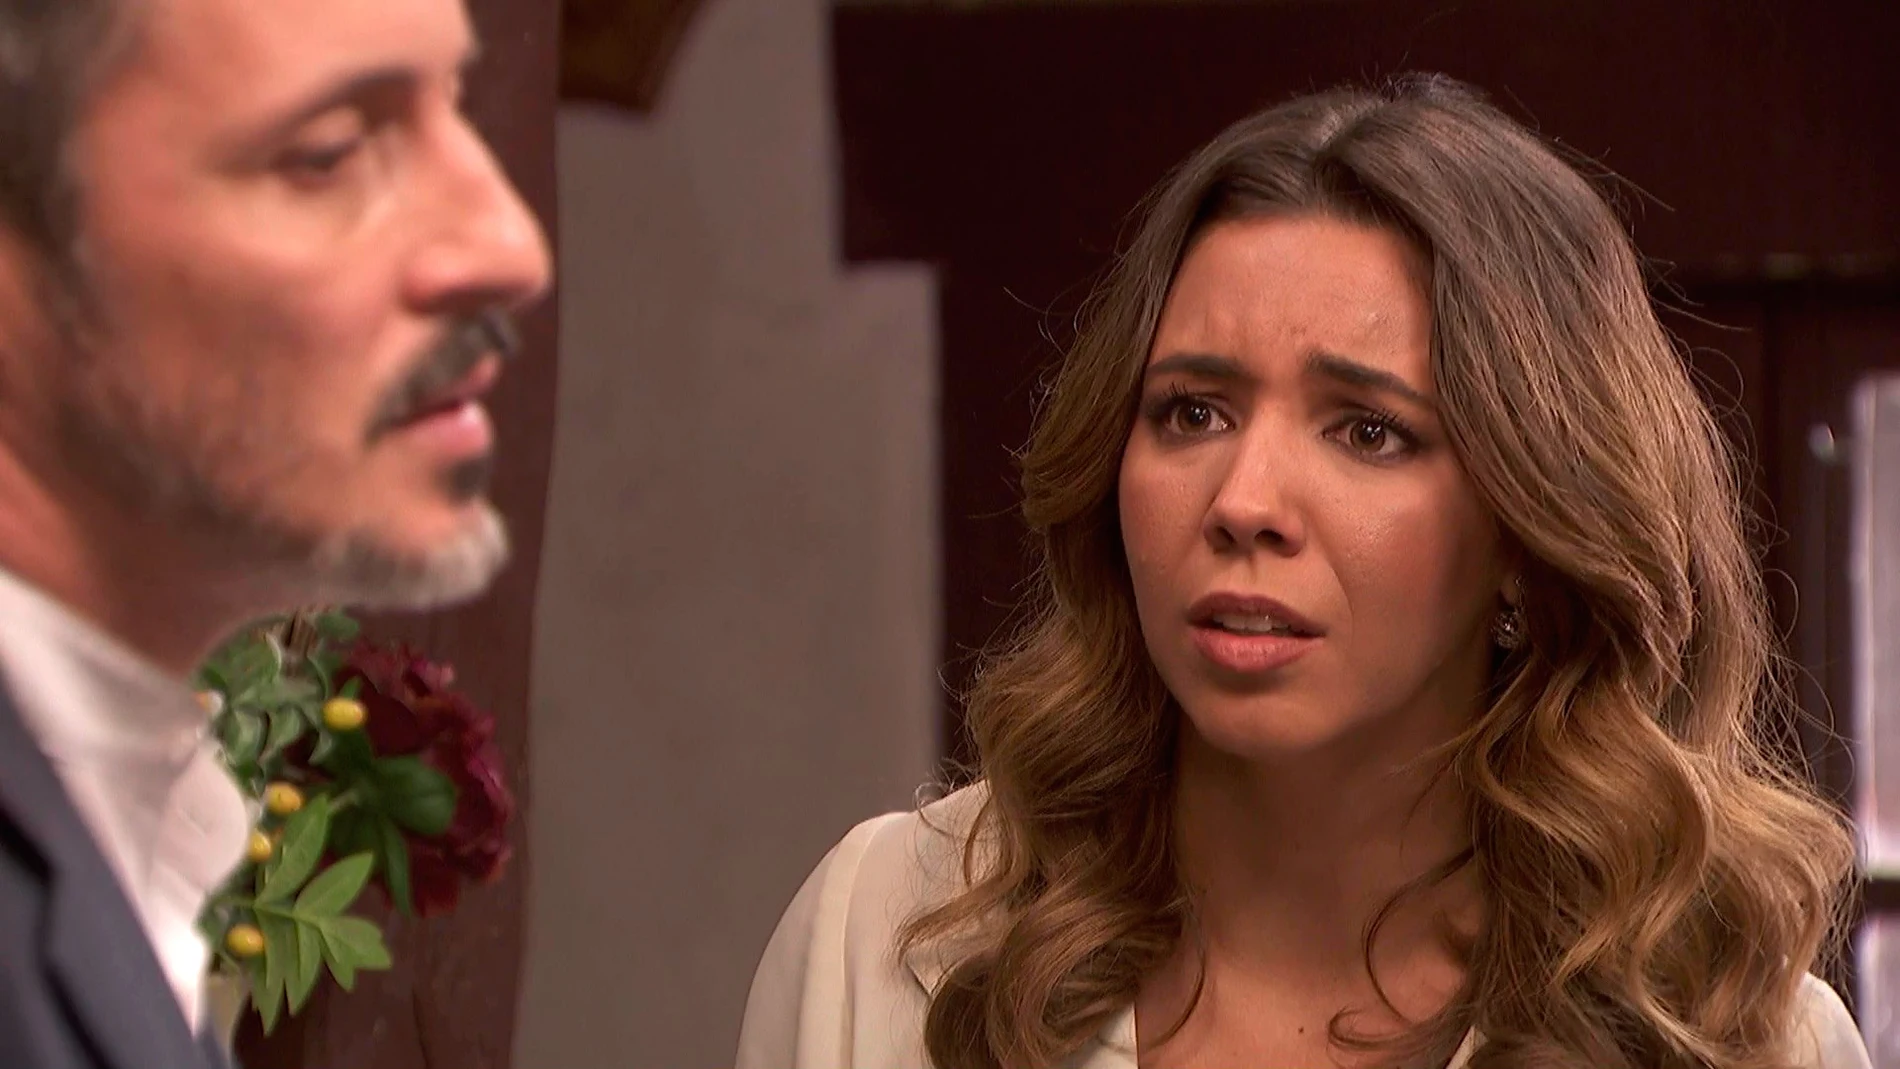 Emilia le planta cara a Alfonso: "No me tomes por estúpida"